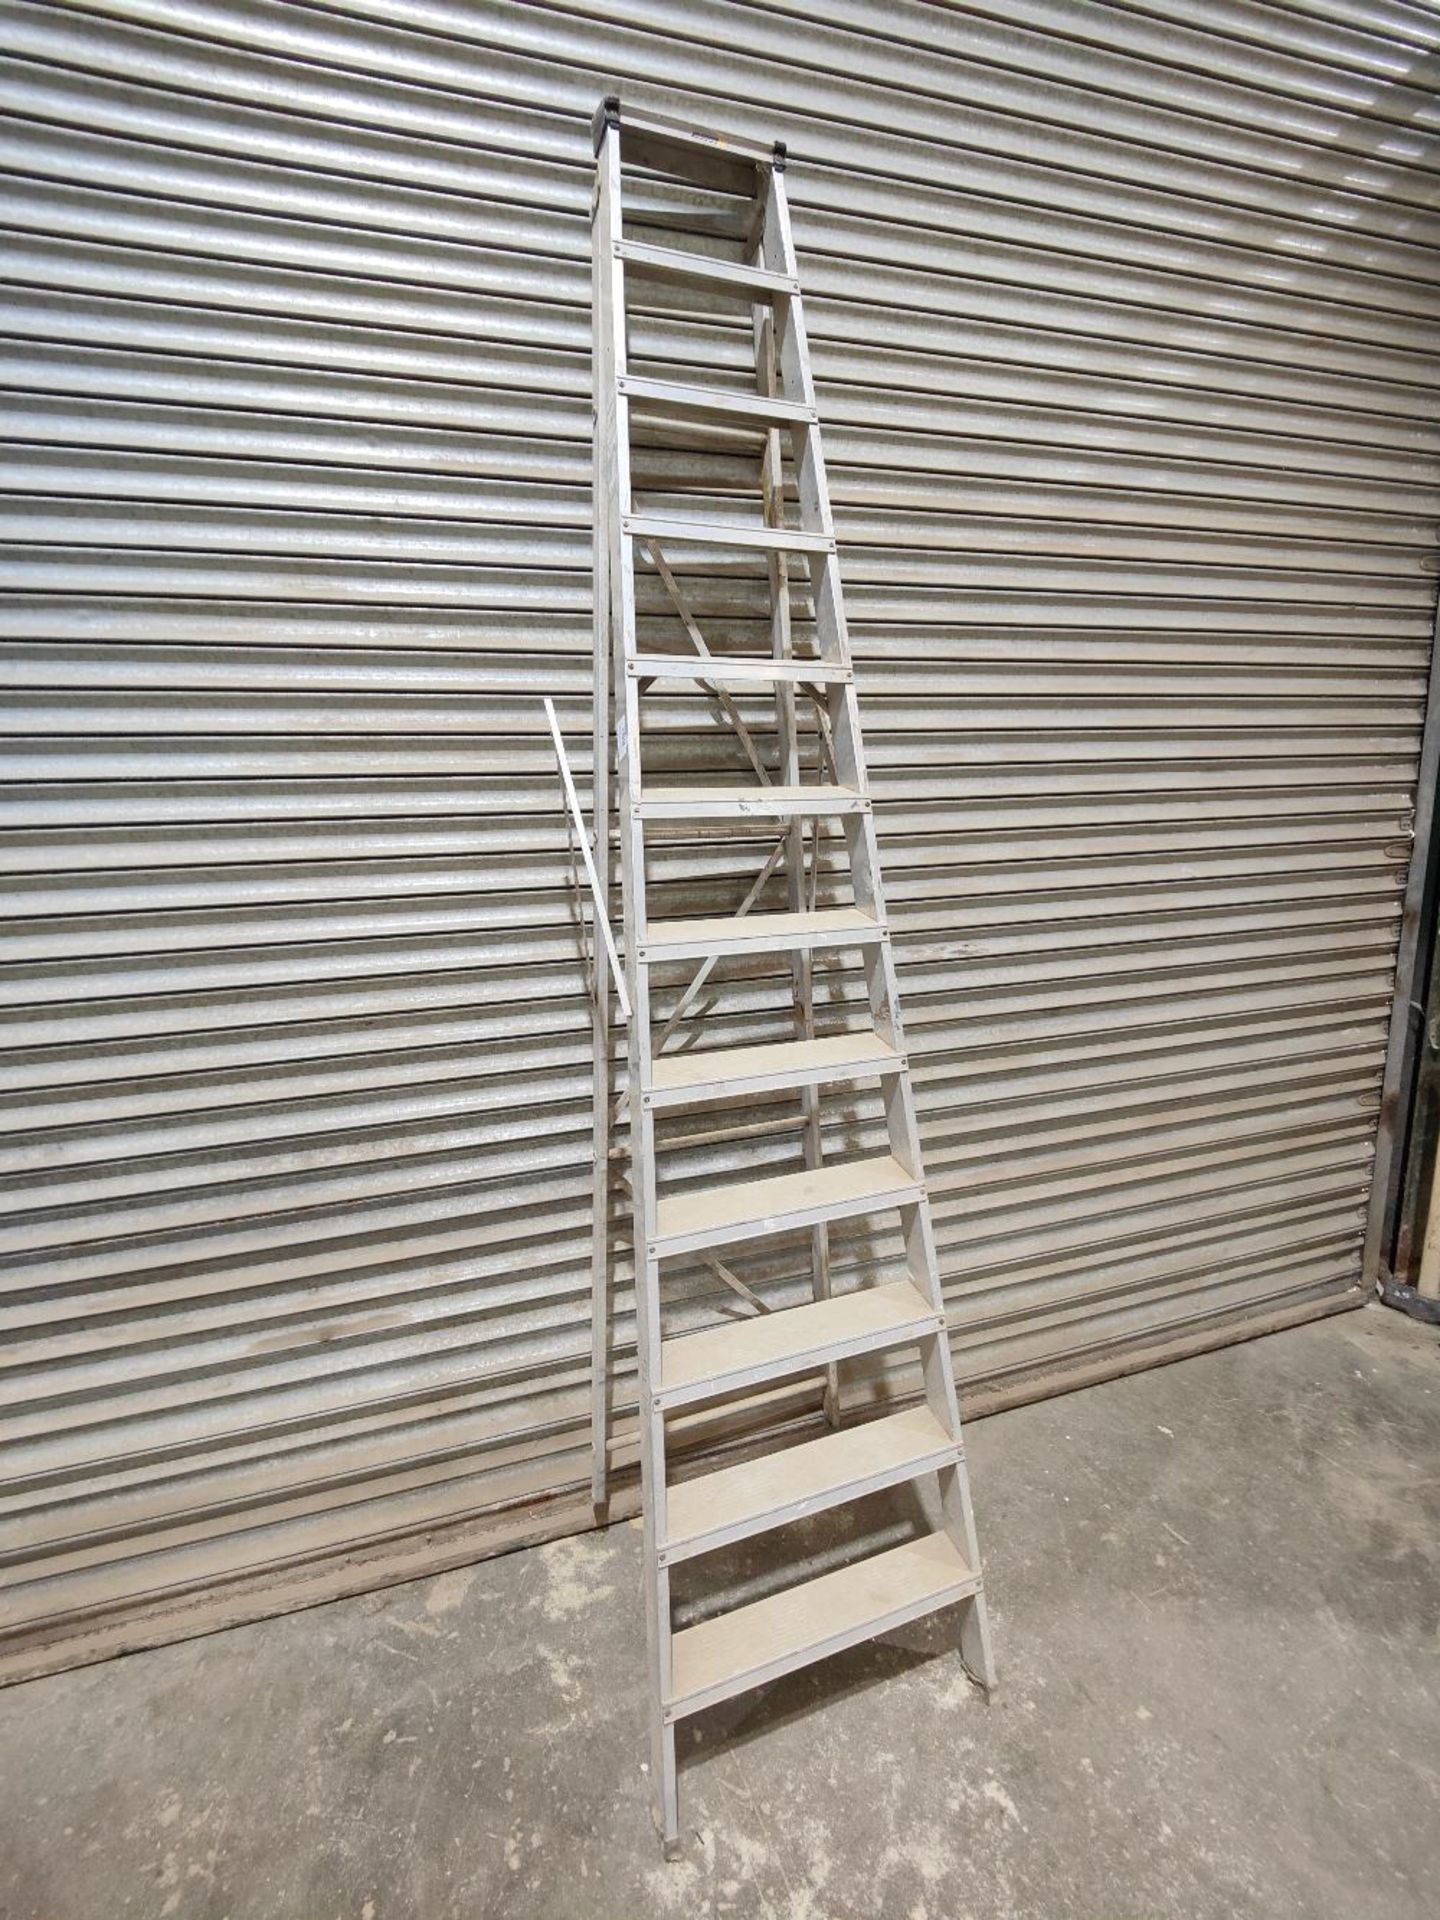 Aluminium 11-rung step ladder